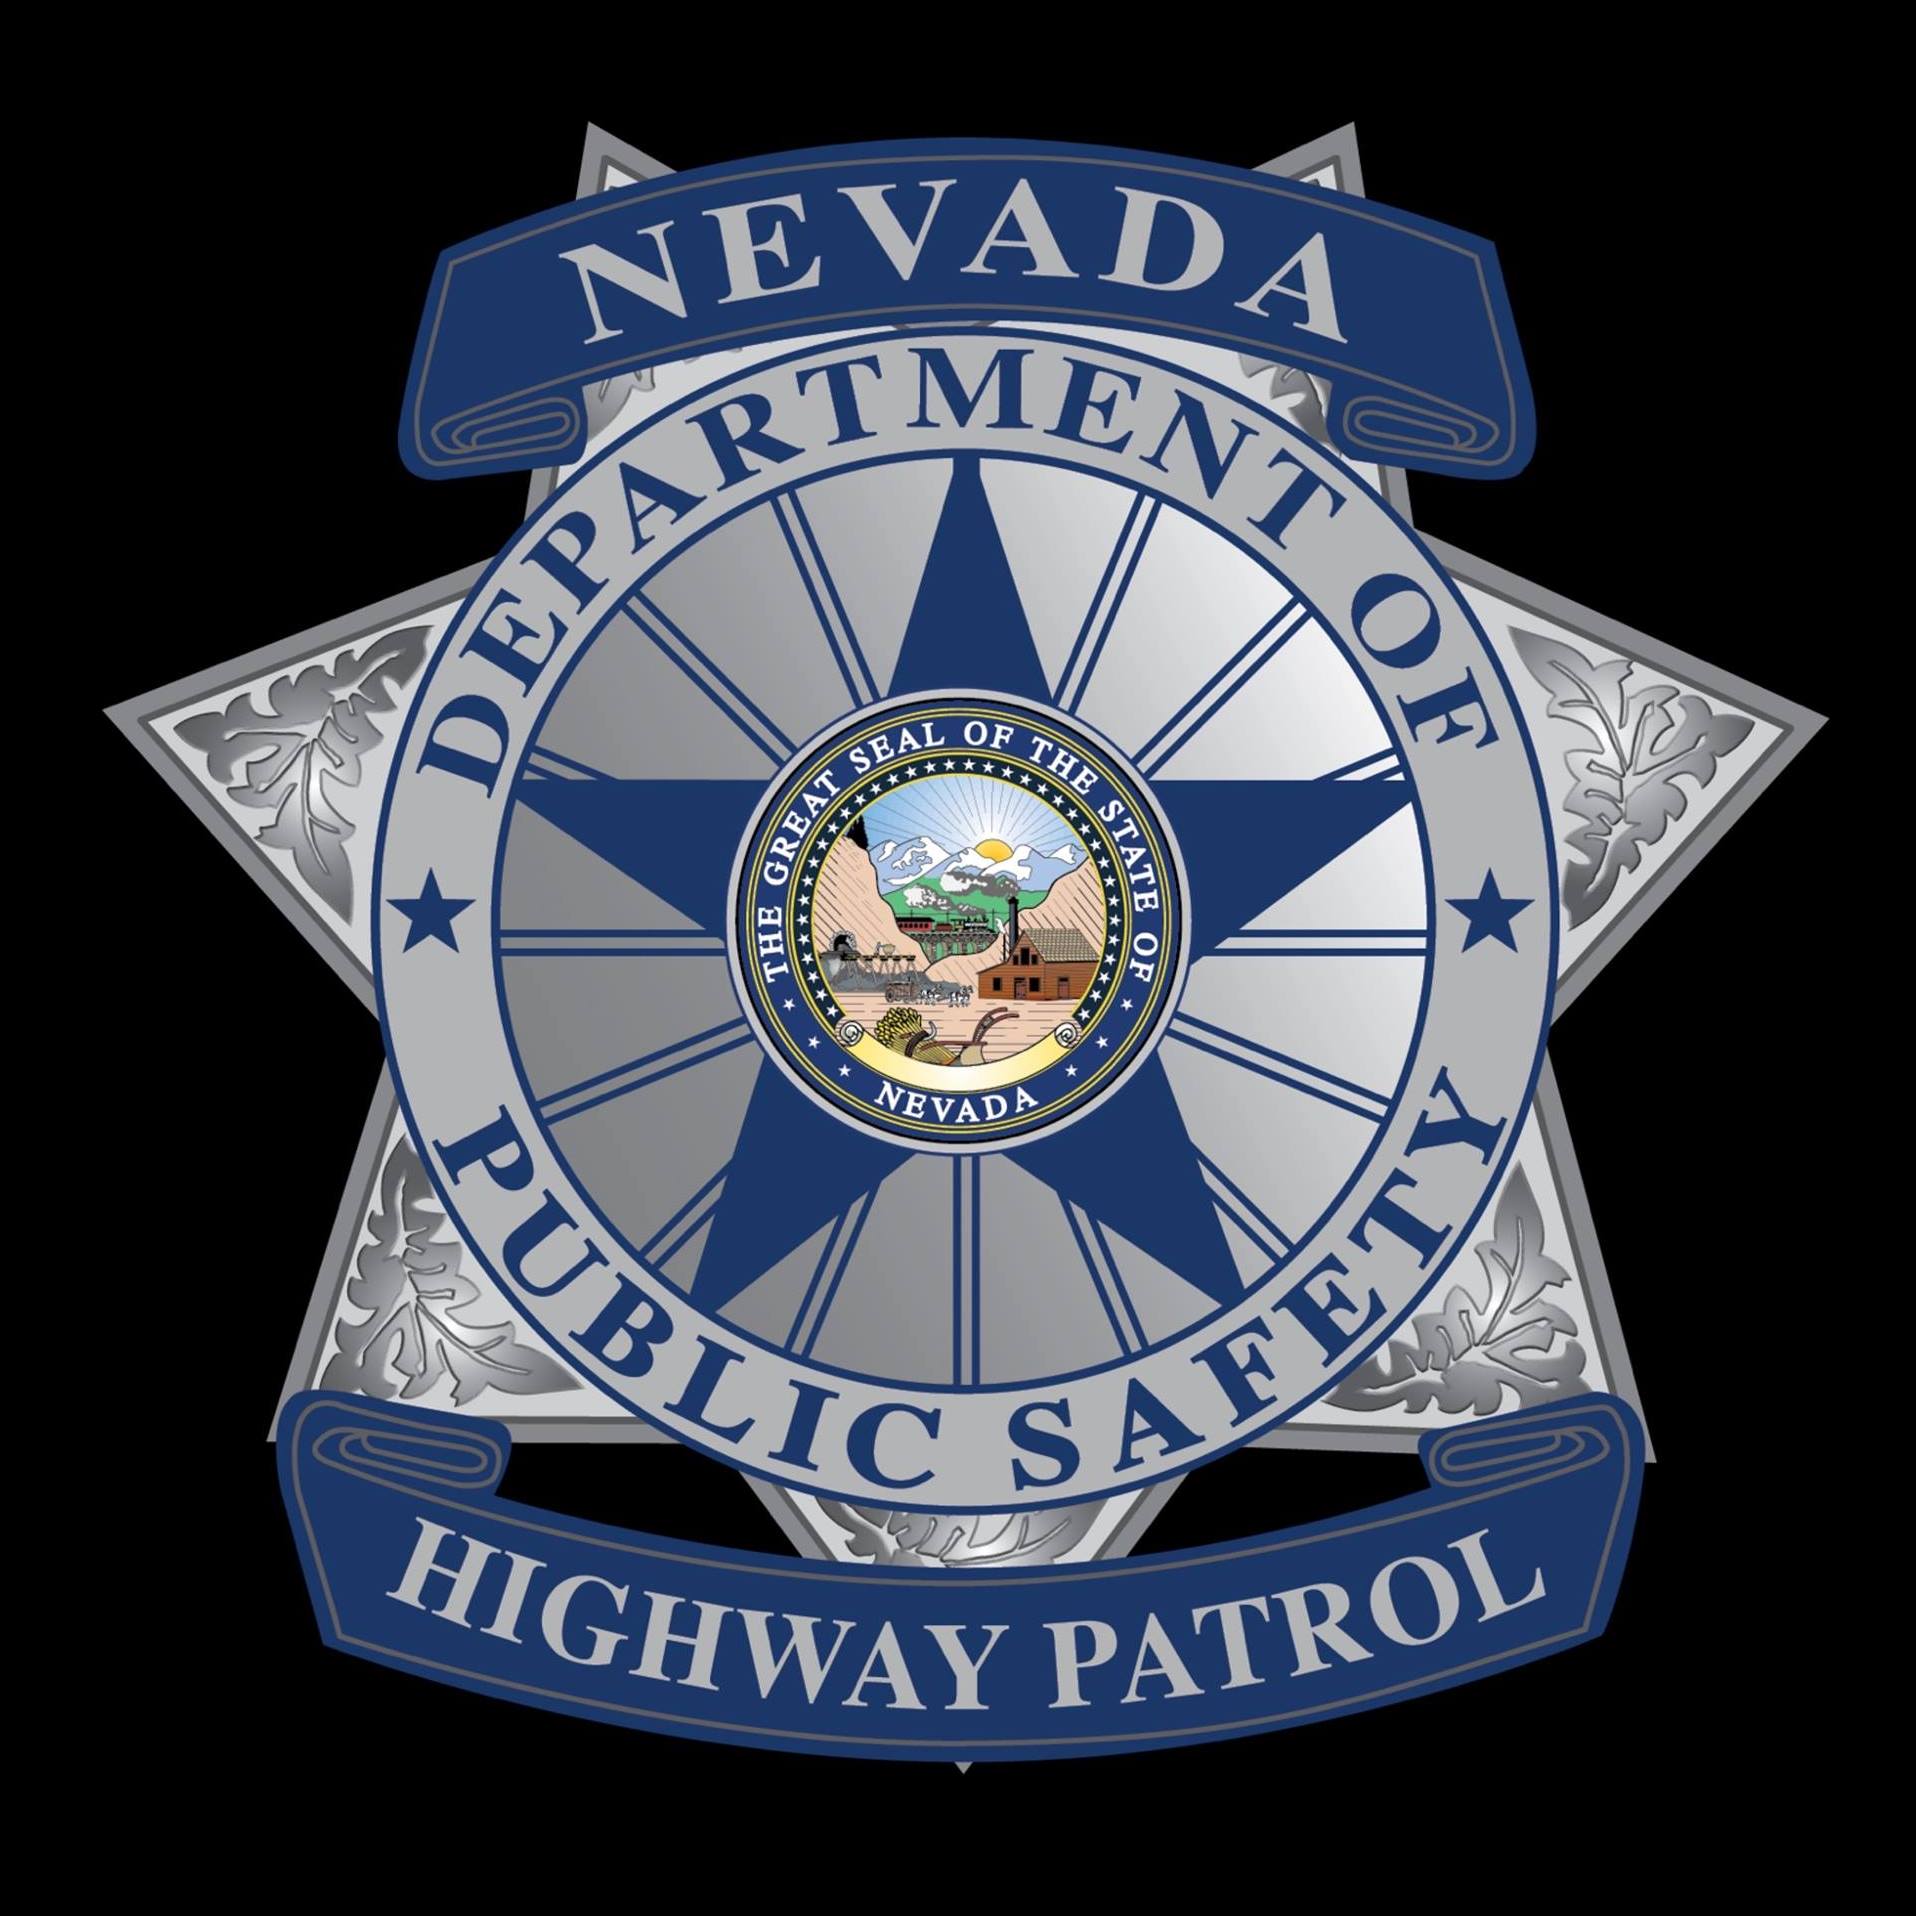 Nevada Highway Patrol insignia